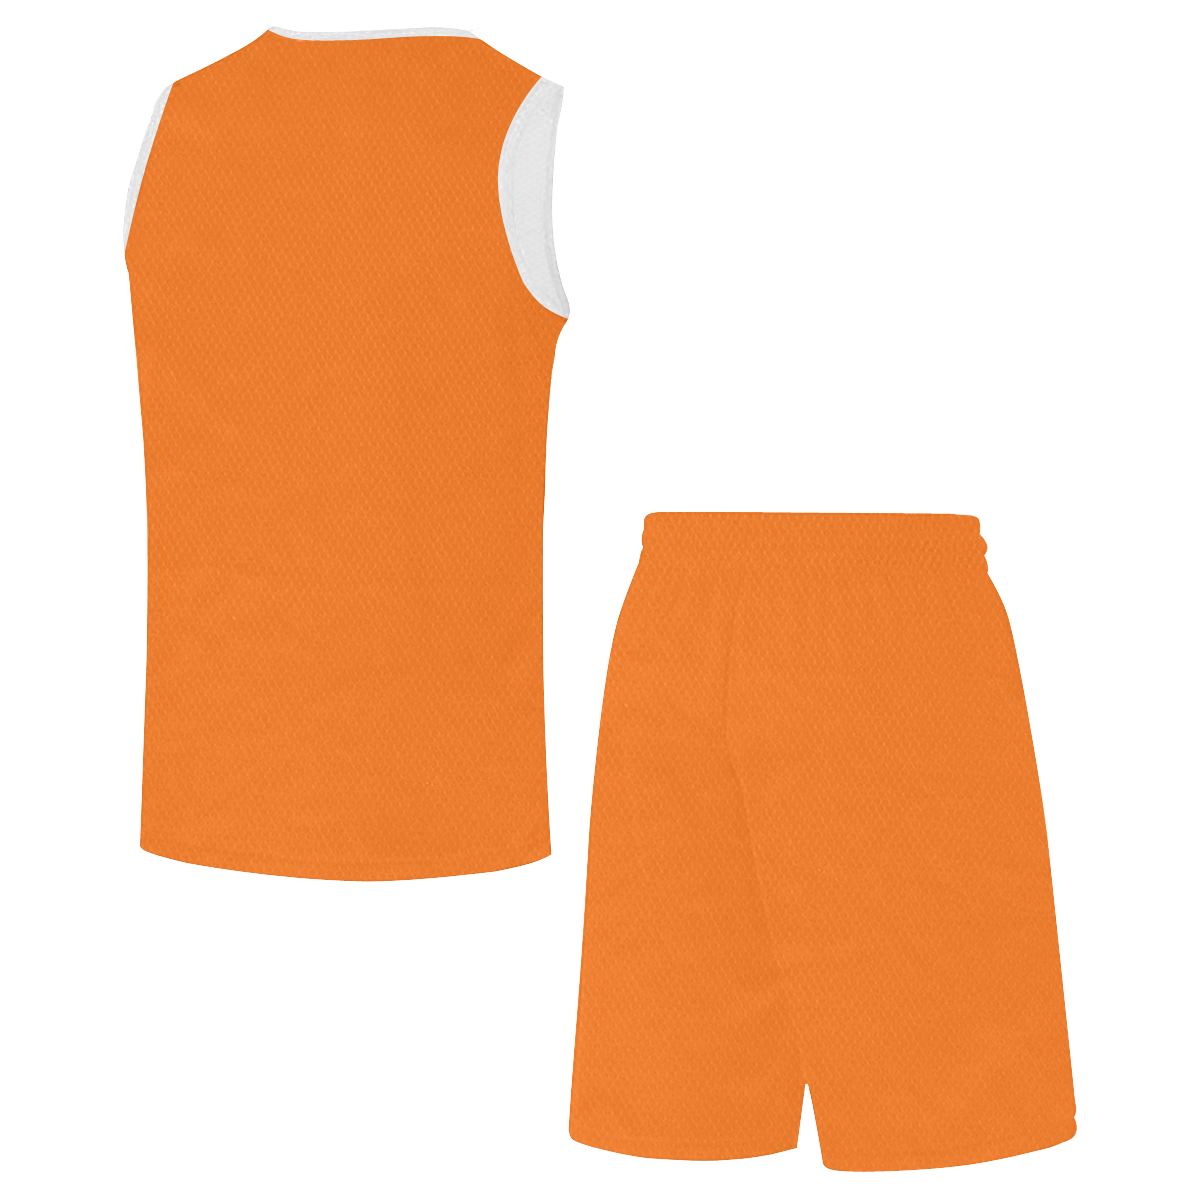 color pumpkin All Over Print Basketball Uniform